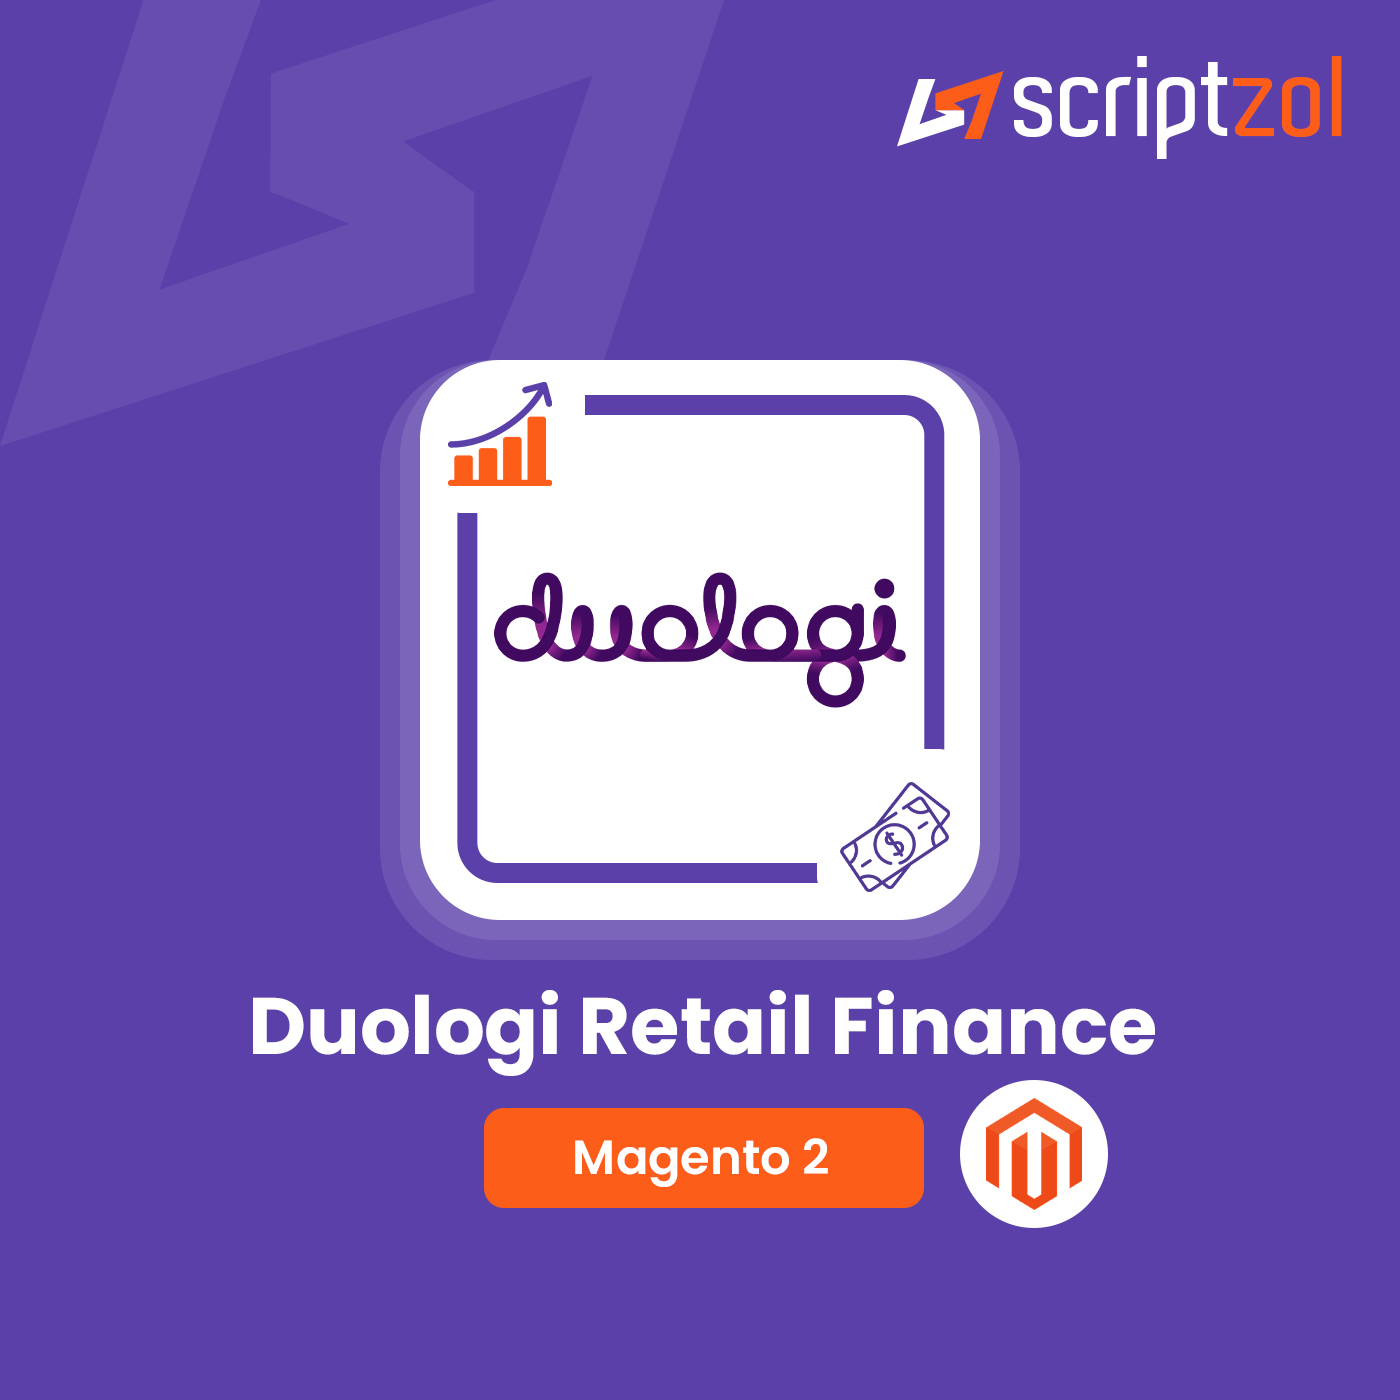 Magento 2 Duologi Retail Finance | Empowering Retail Financing - Scriptzol